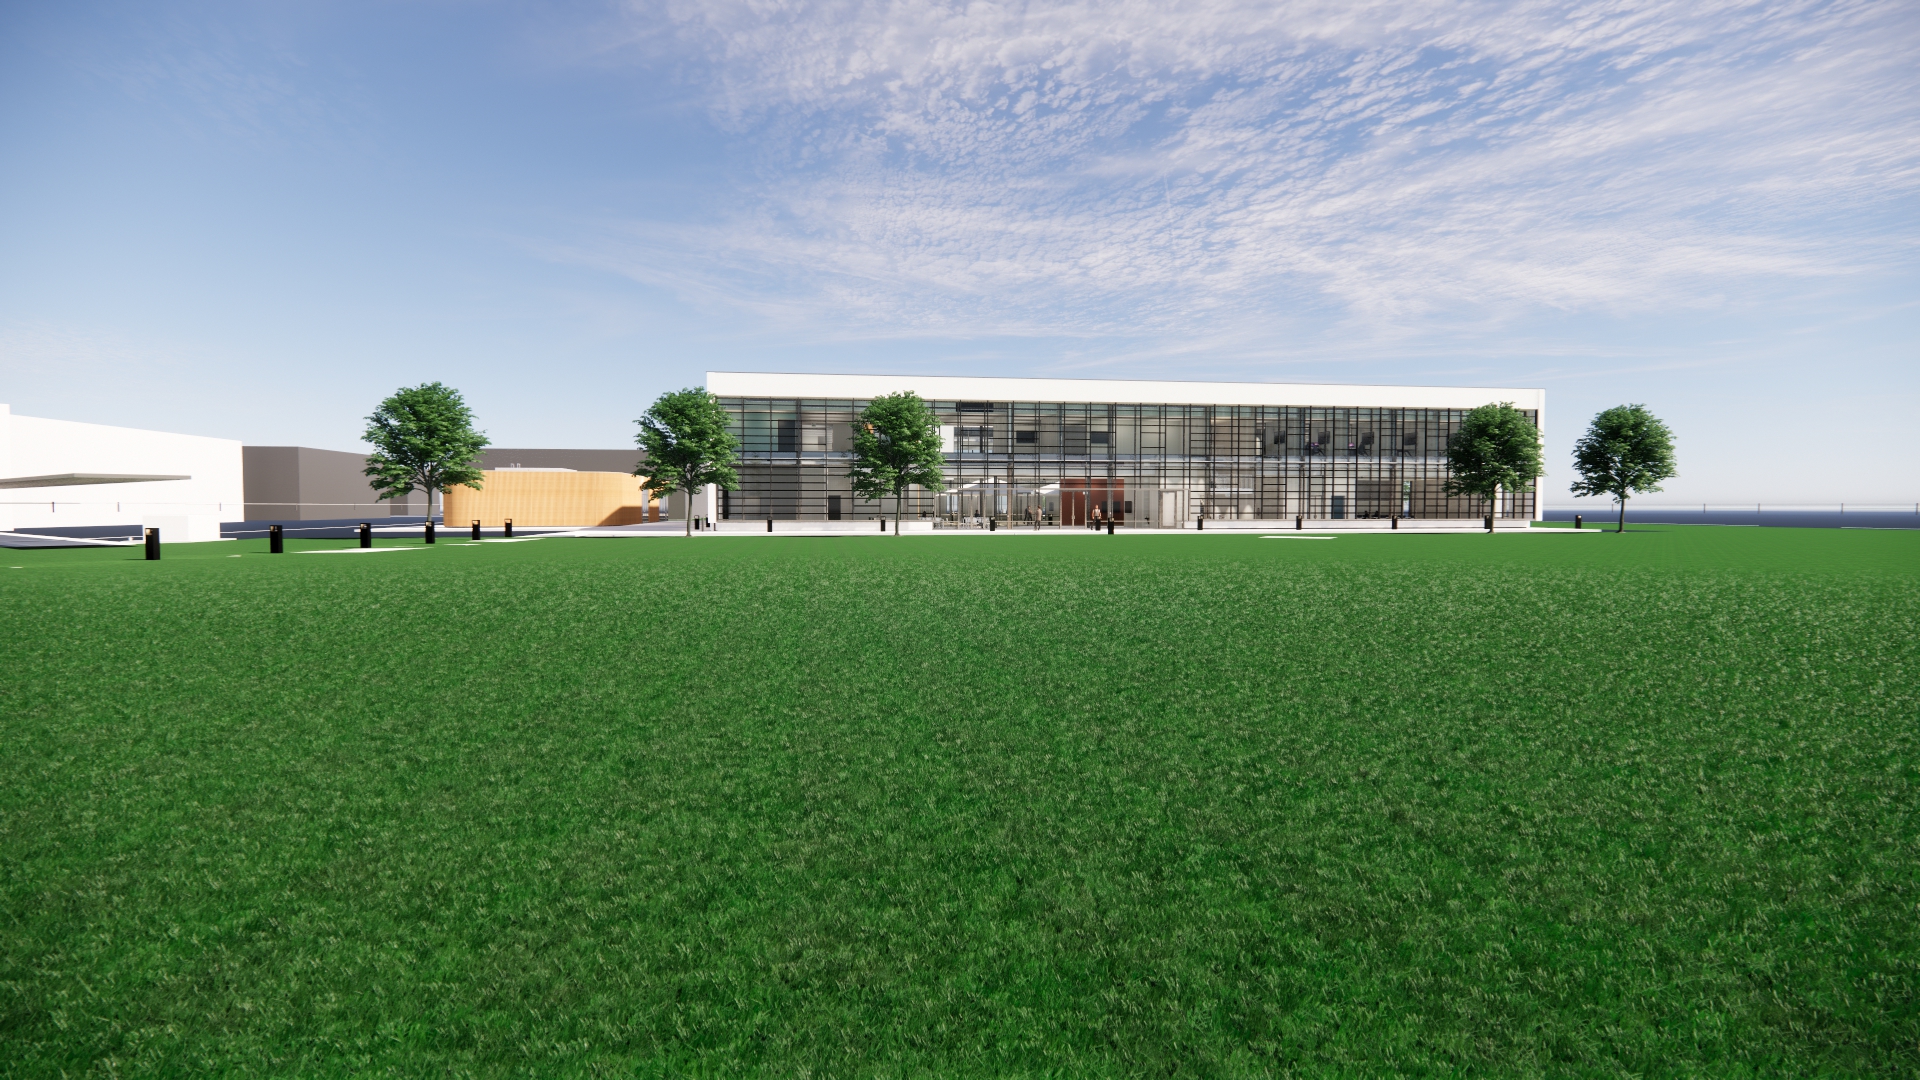 Grundfos building new Regional Center in Texas